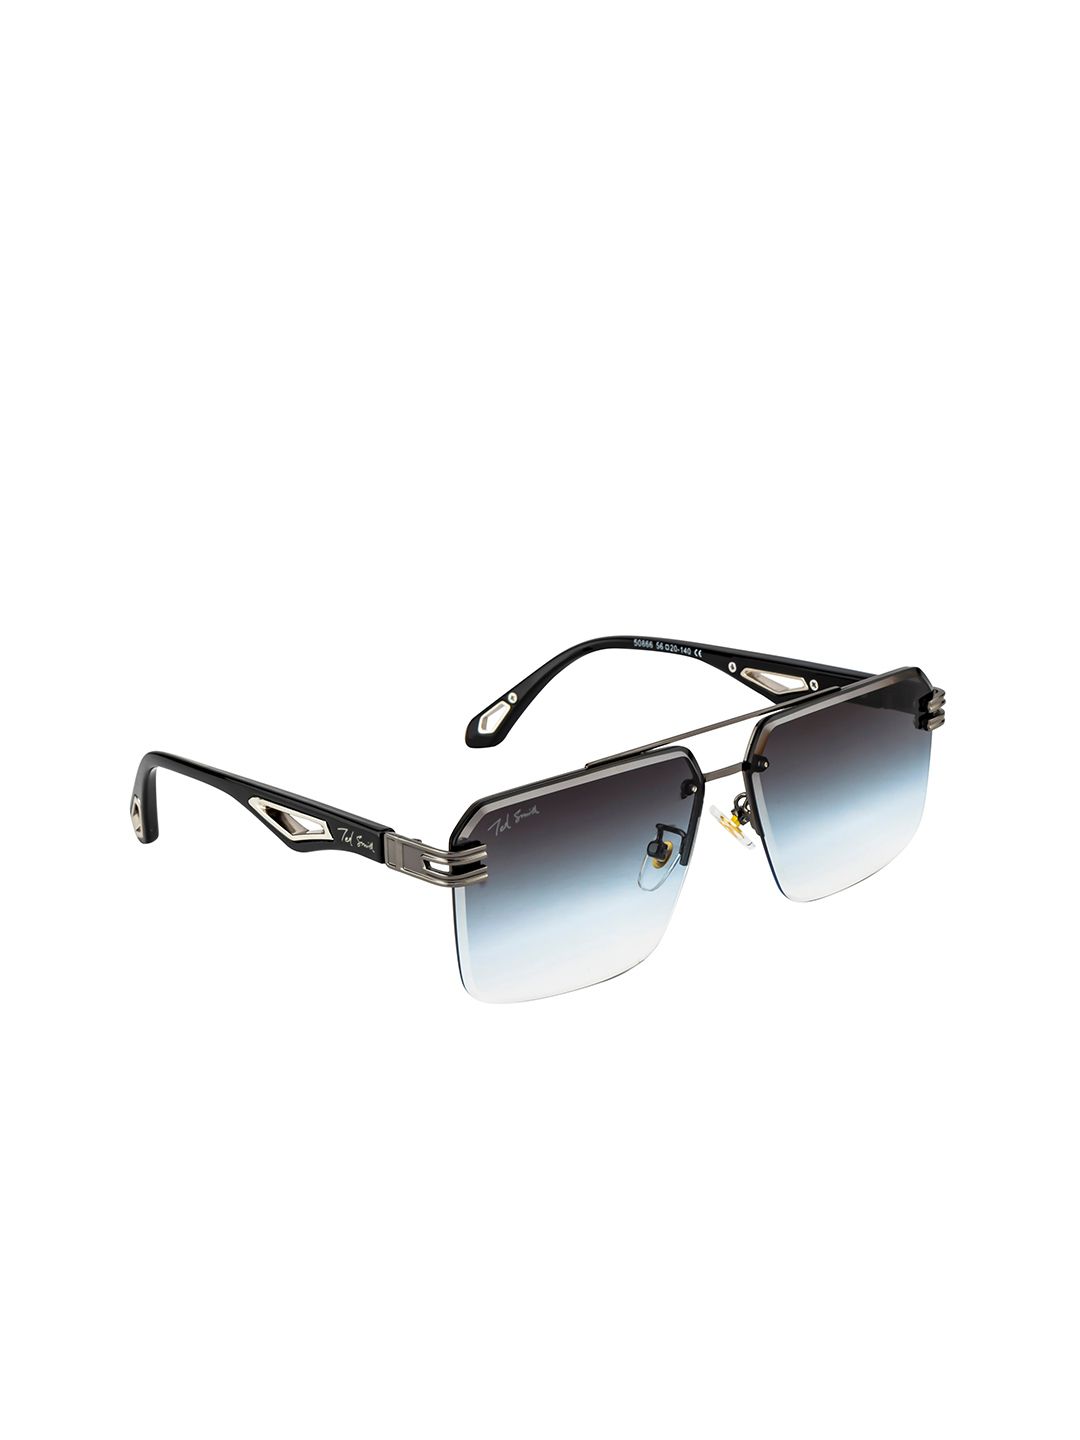 Ted Smith Unisex Blue Lens & Gunmetal-Toned UV Protected Rectangle Sunglasses HILTON2_C4 Price in India